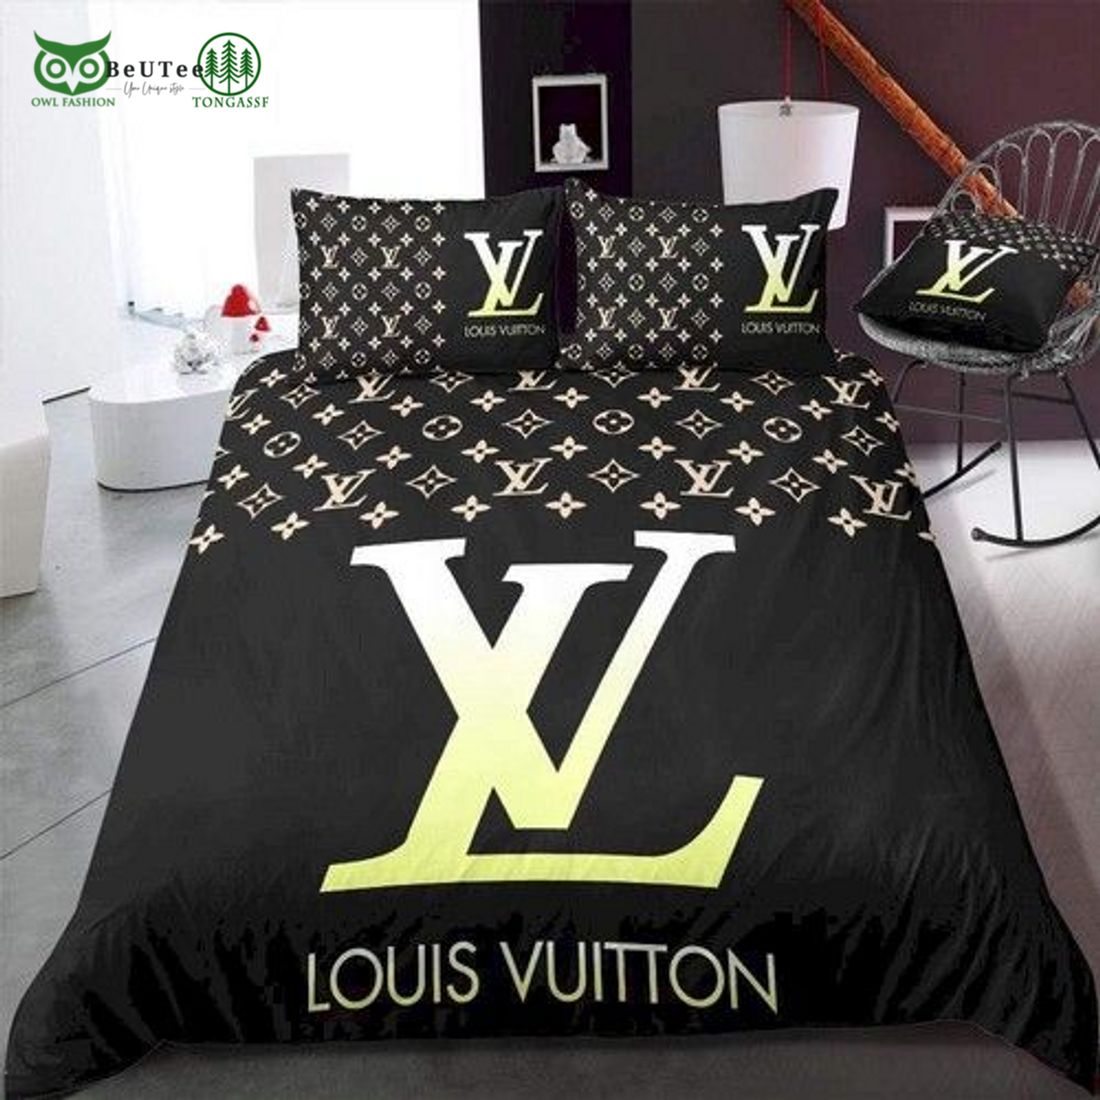 Luxury Louis Vuitton Paris Logo in Black Background Bedding Set